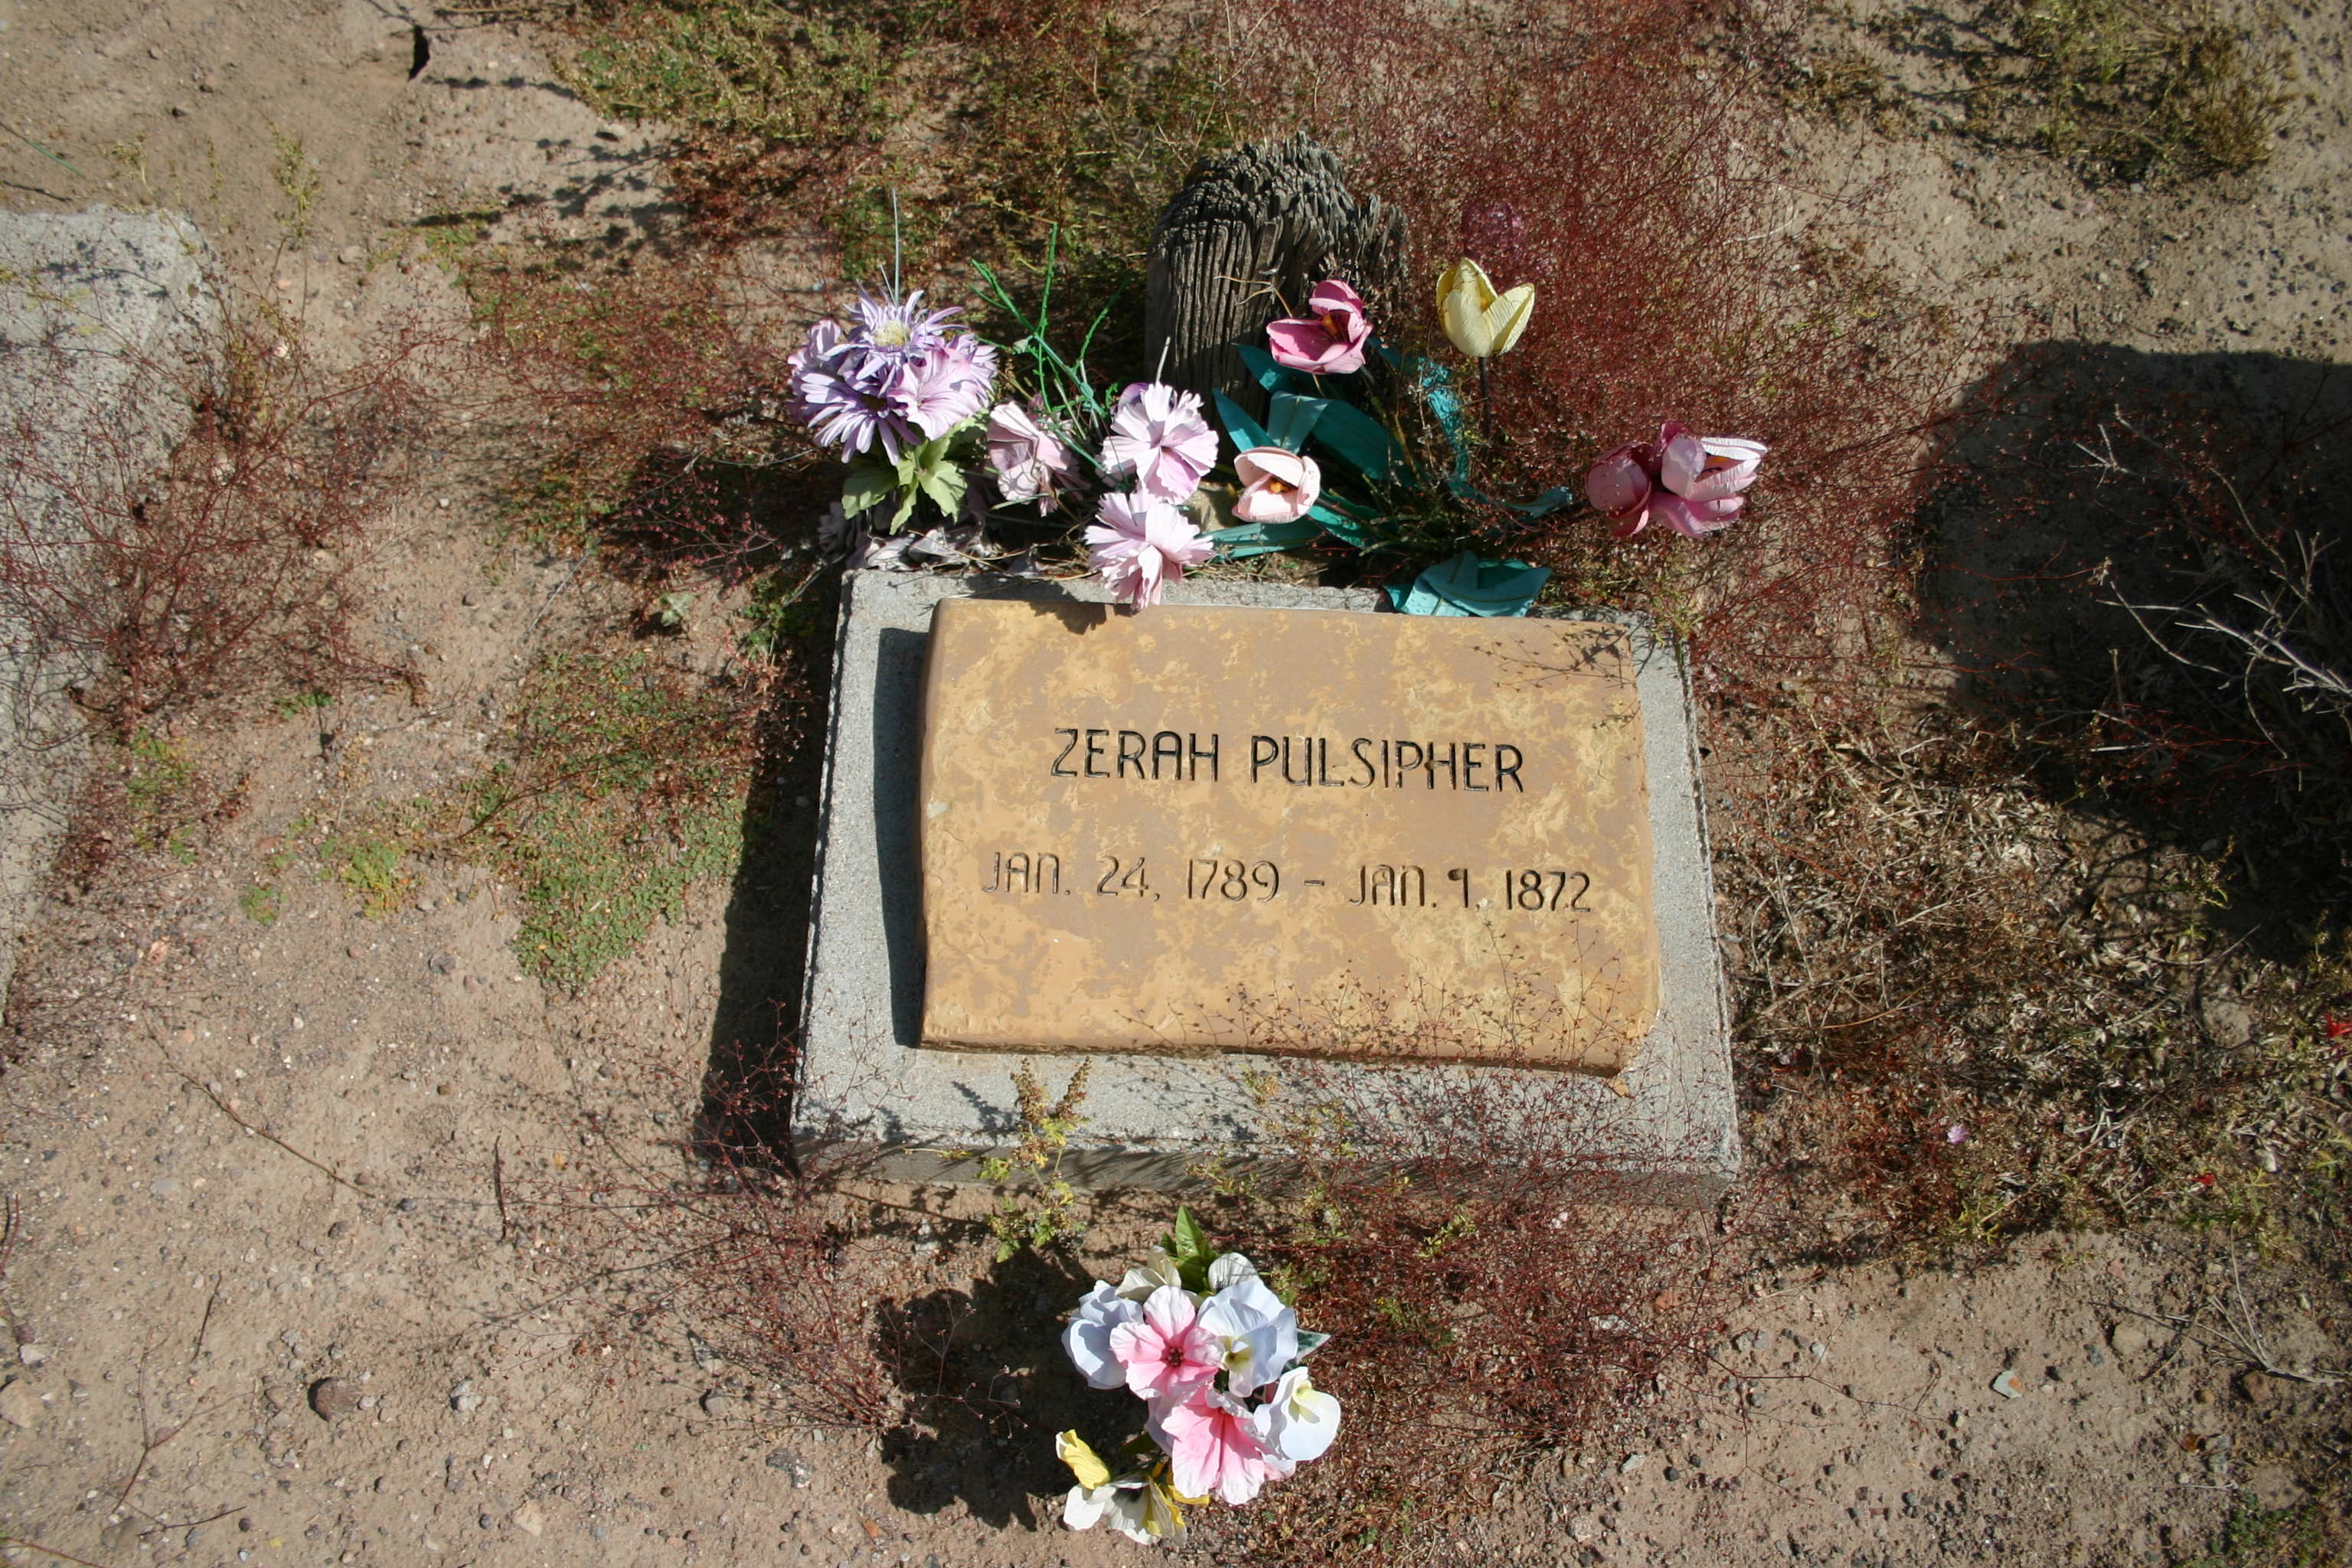 Zarah Pulsipher gravestone at the Hebron Cemetery